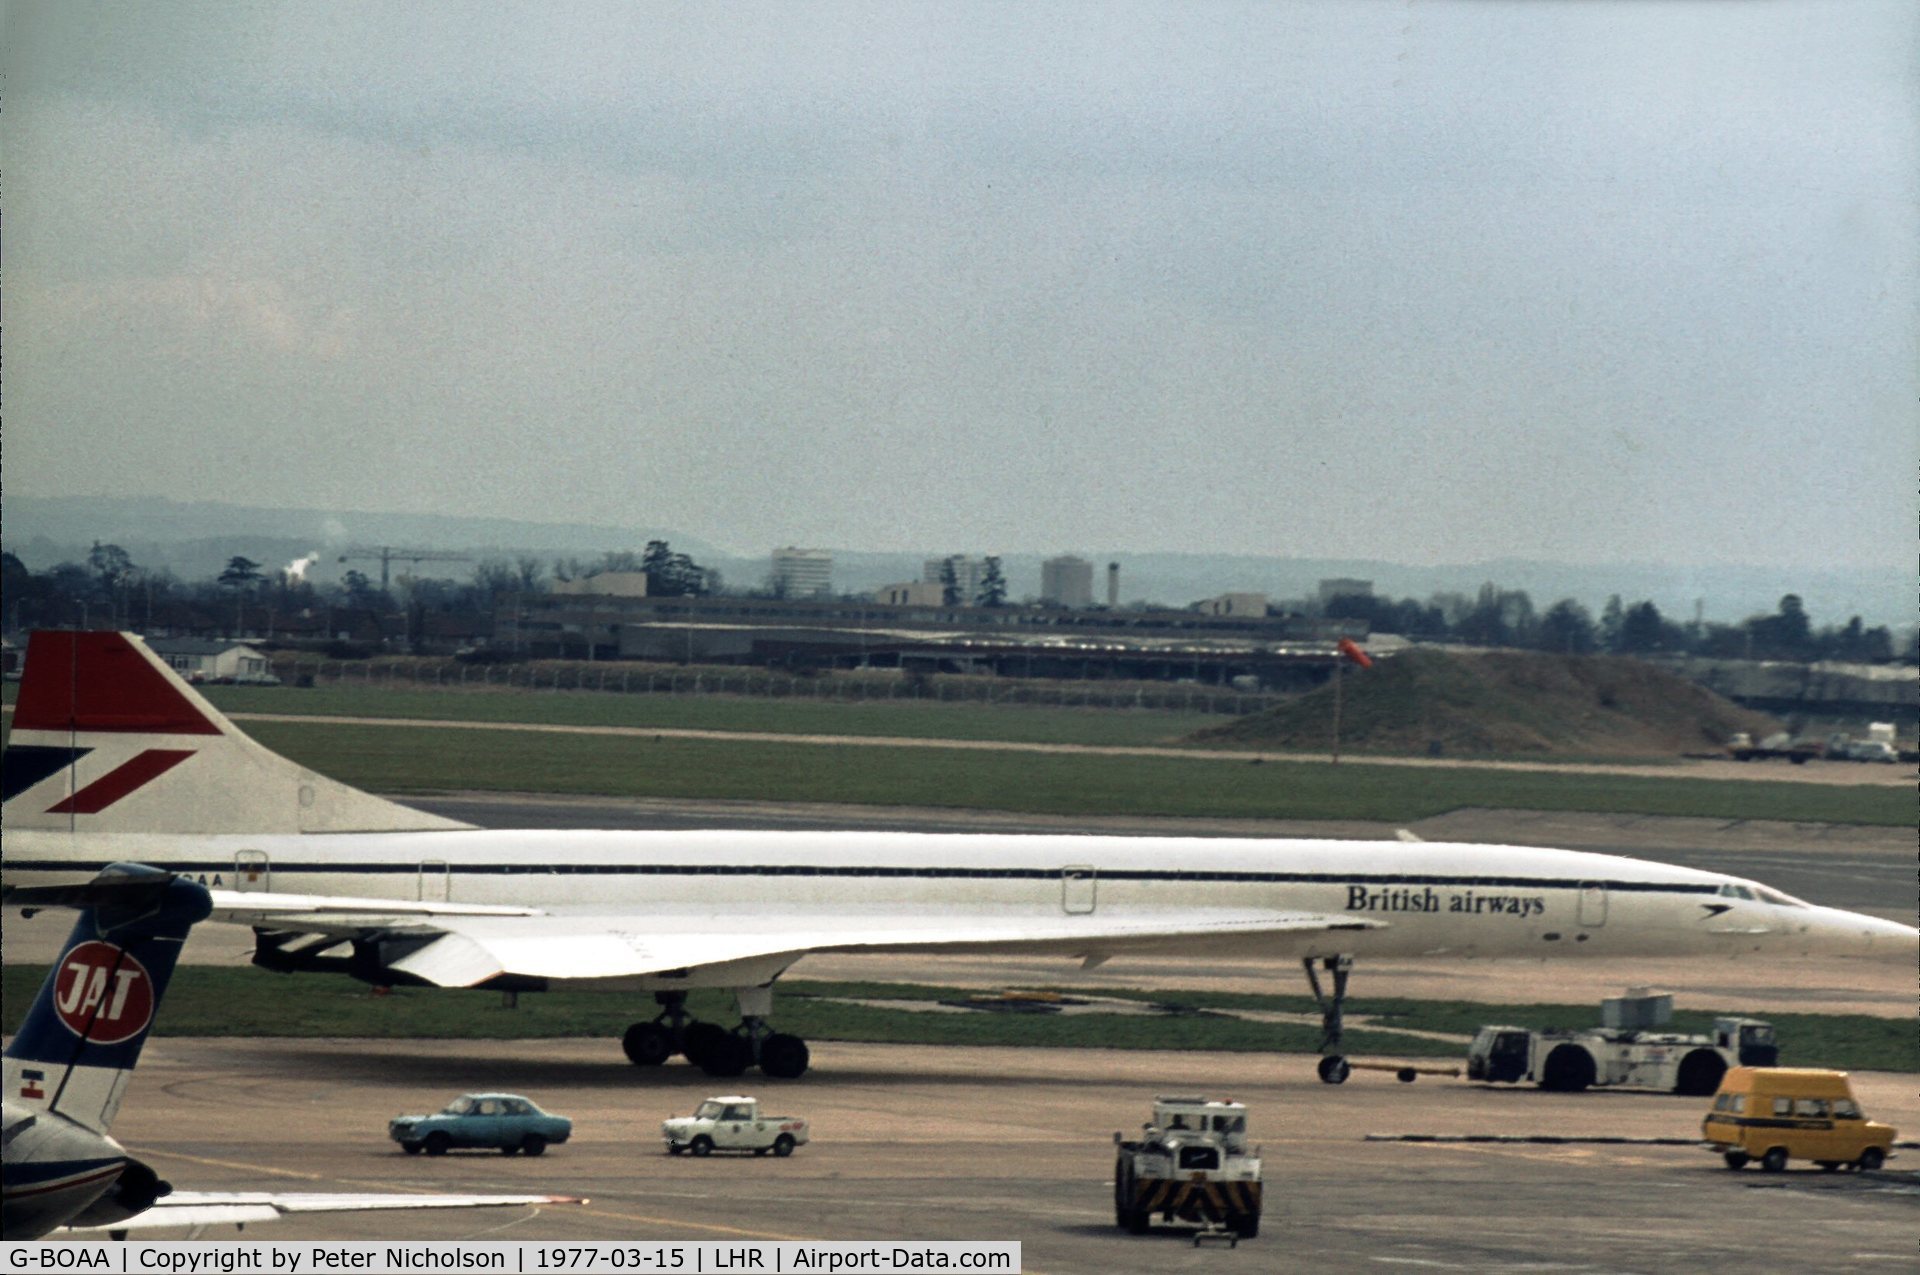 G-BOAA, 1974 Aerospatiale-BAC Concorde 1-102 C/N 100-006, As seen in British Airways service at London Heathrow in the Spring of 1977.